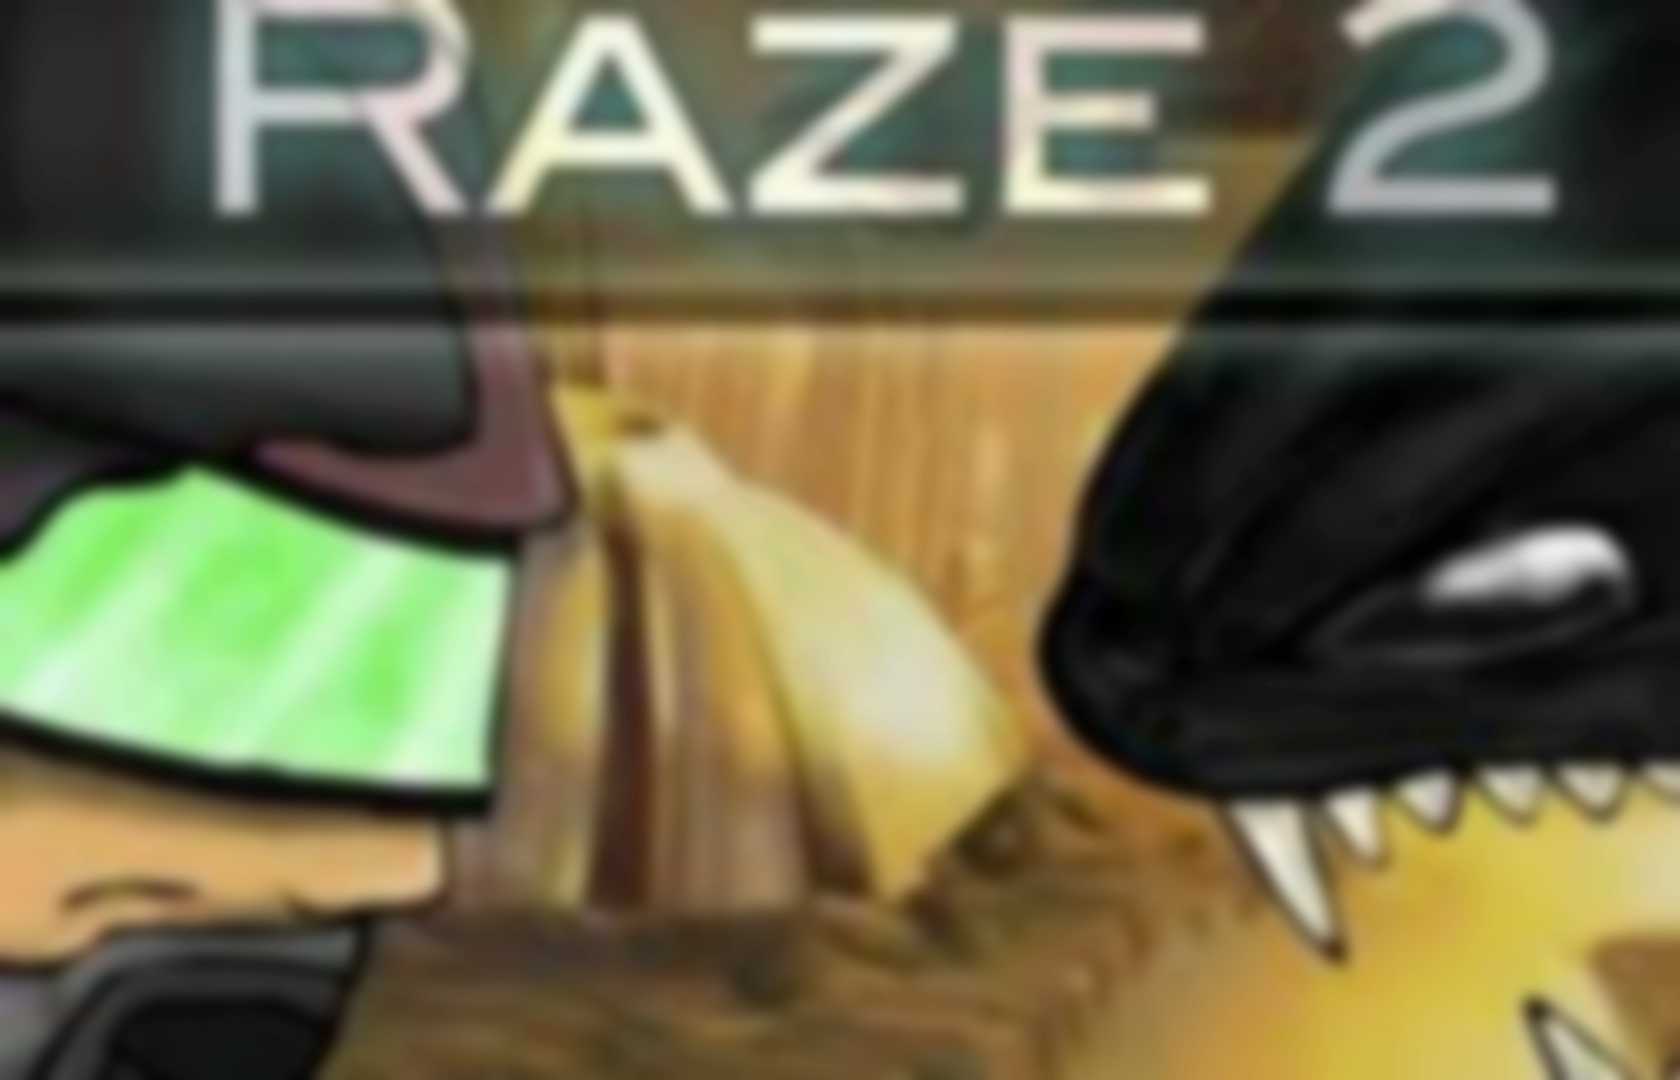 play raze 2 game online